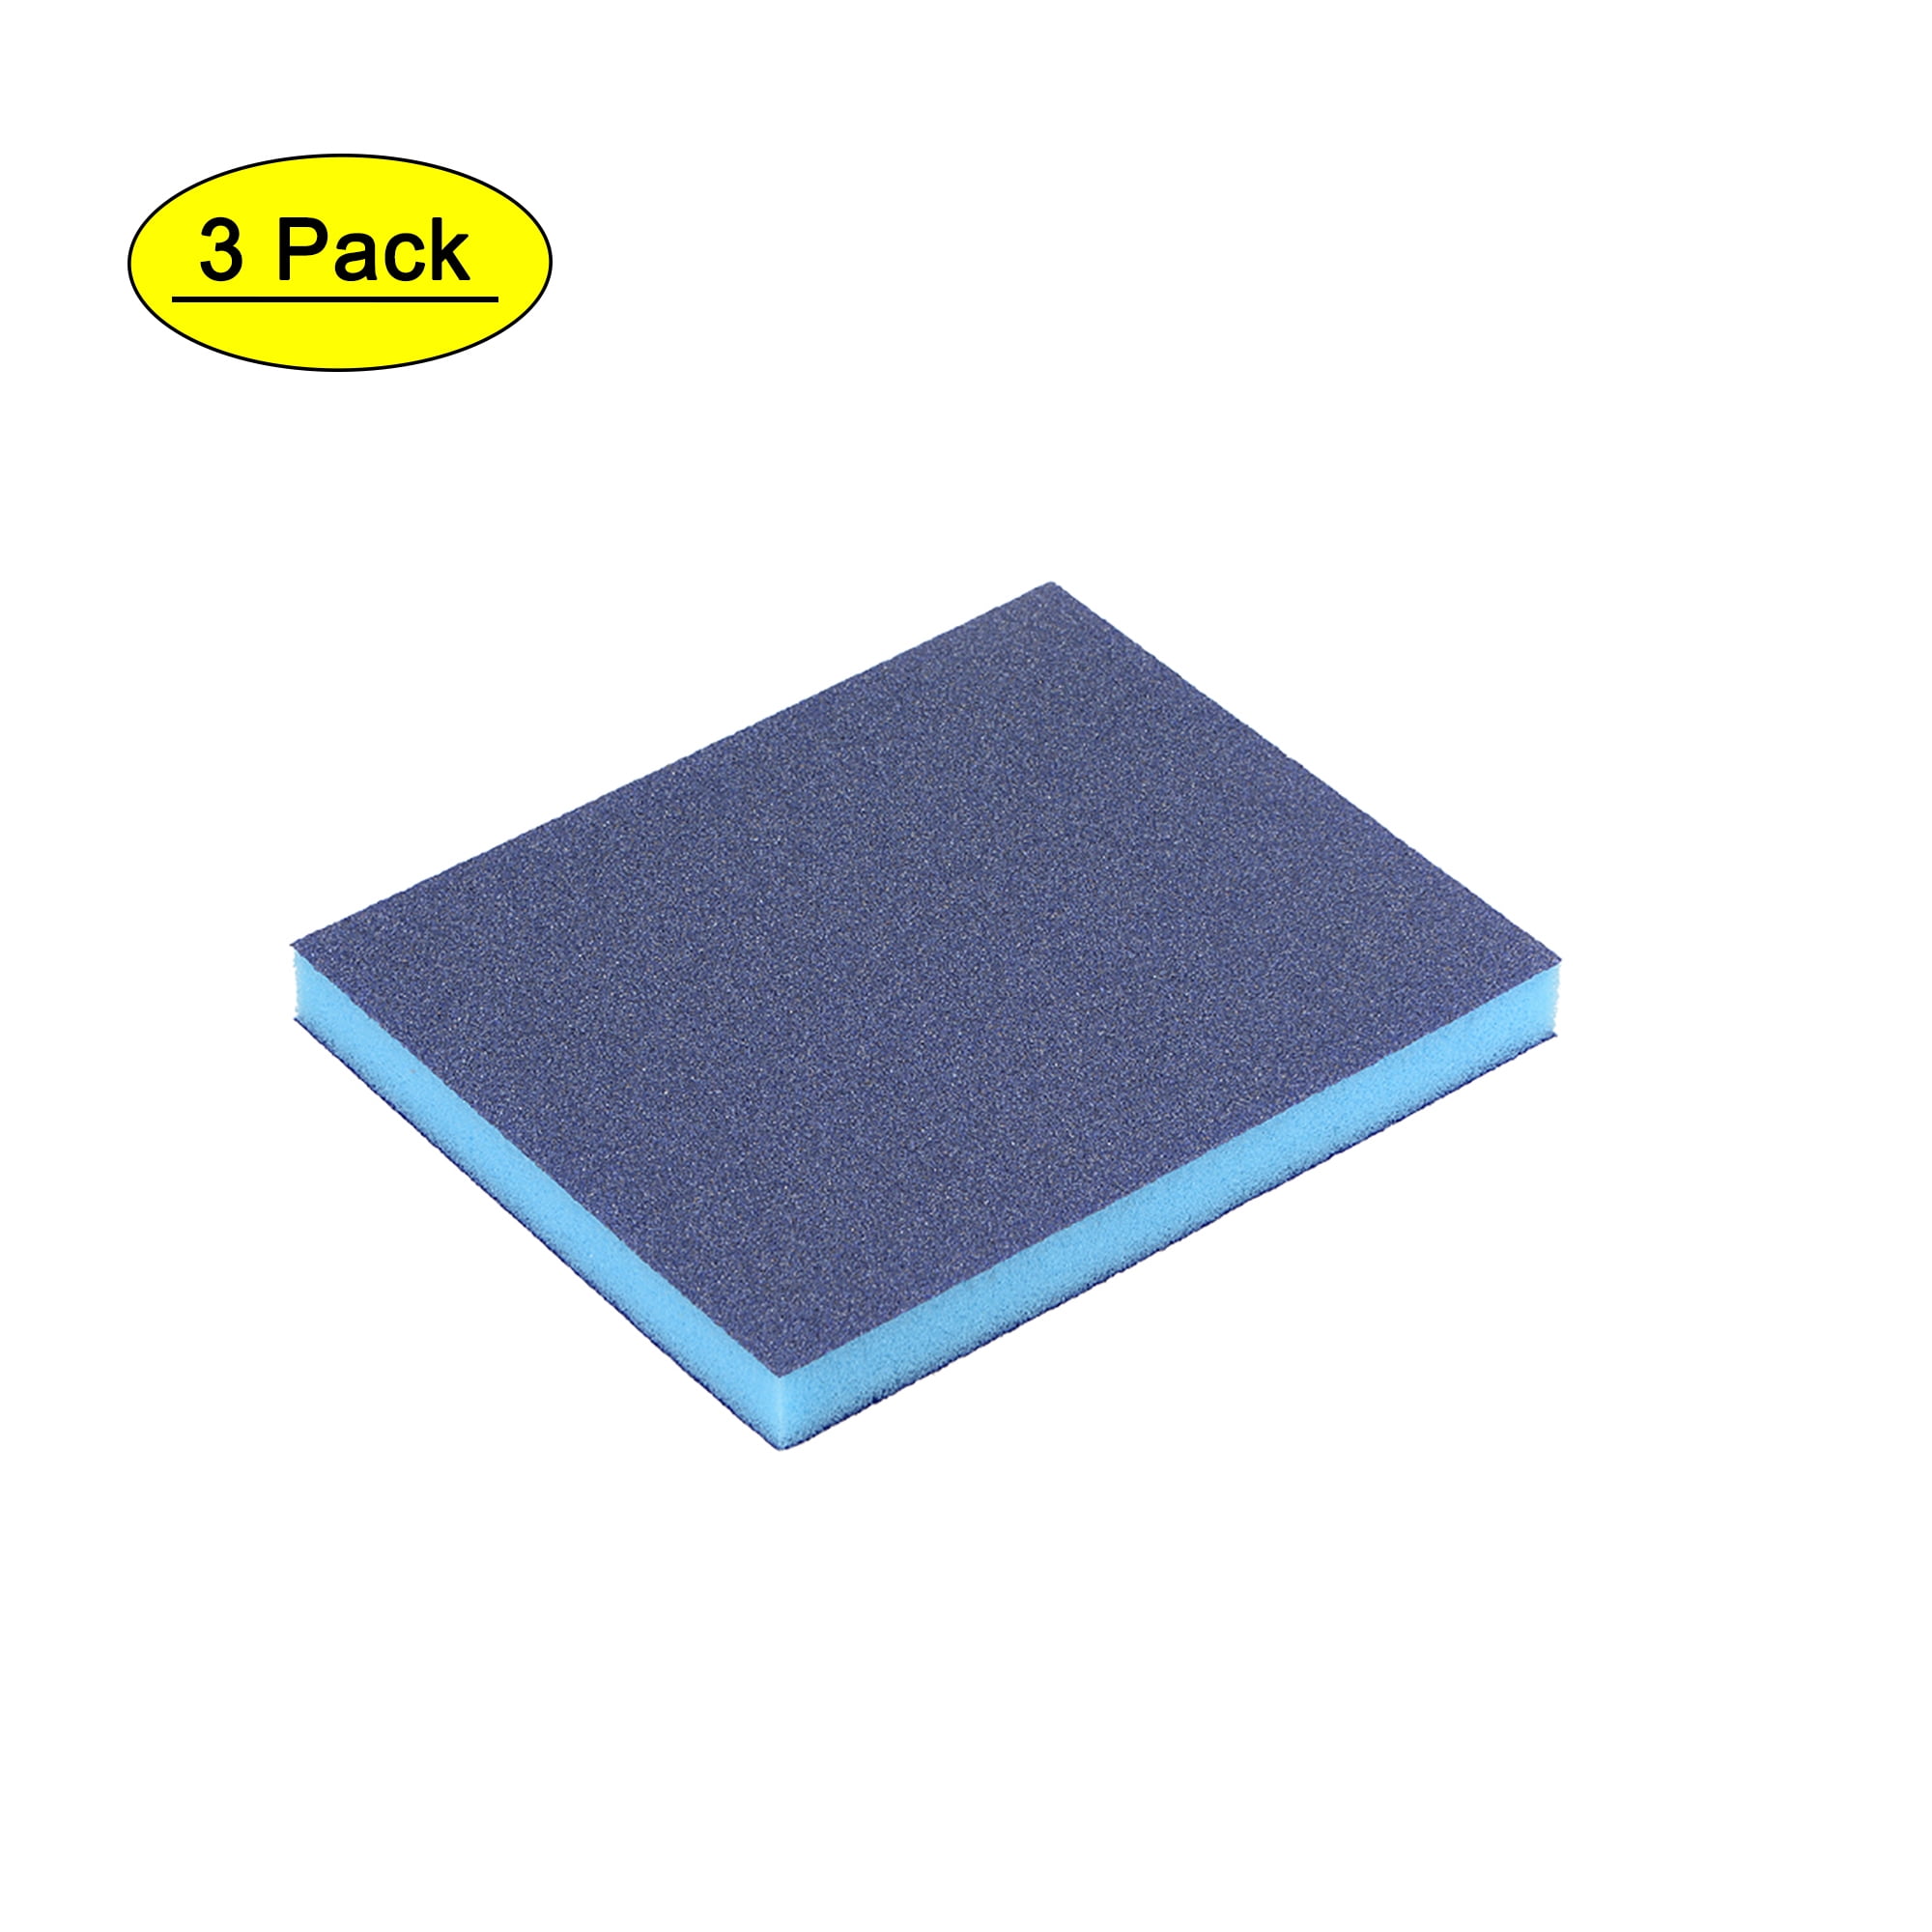 120-Grits Medium Grit Sand Block Pad uxcell Sanding Sponge Sanding Block 4.7 x 3.9 x 0.5 Size 12pcs 